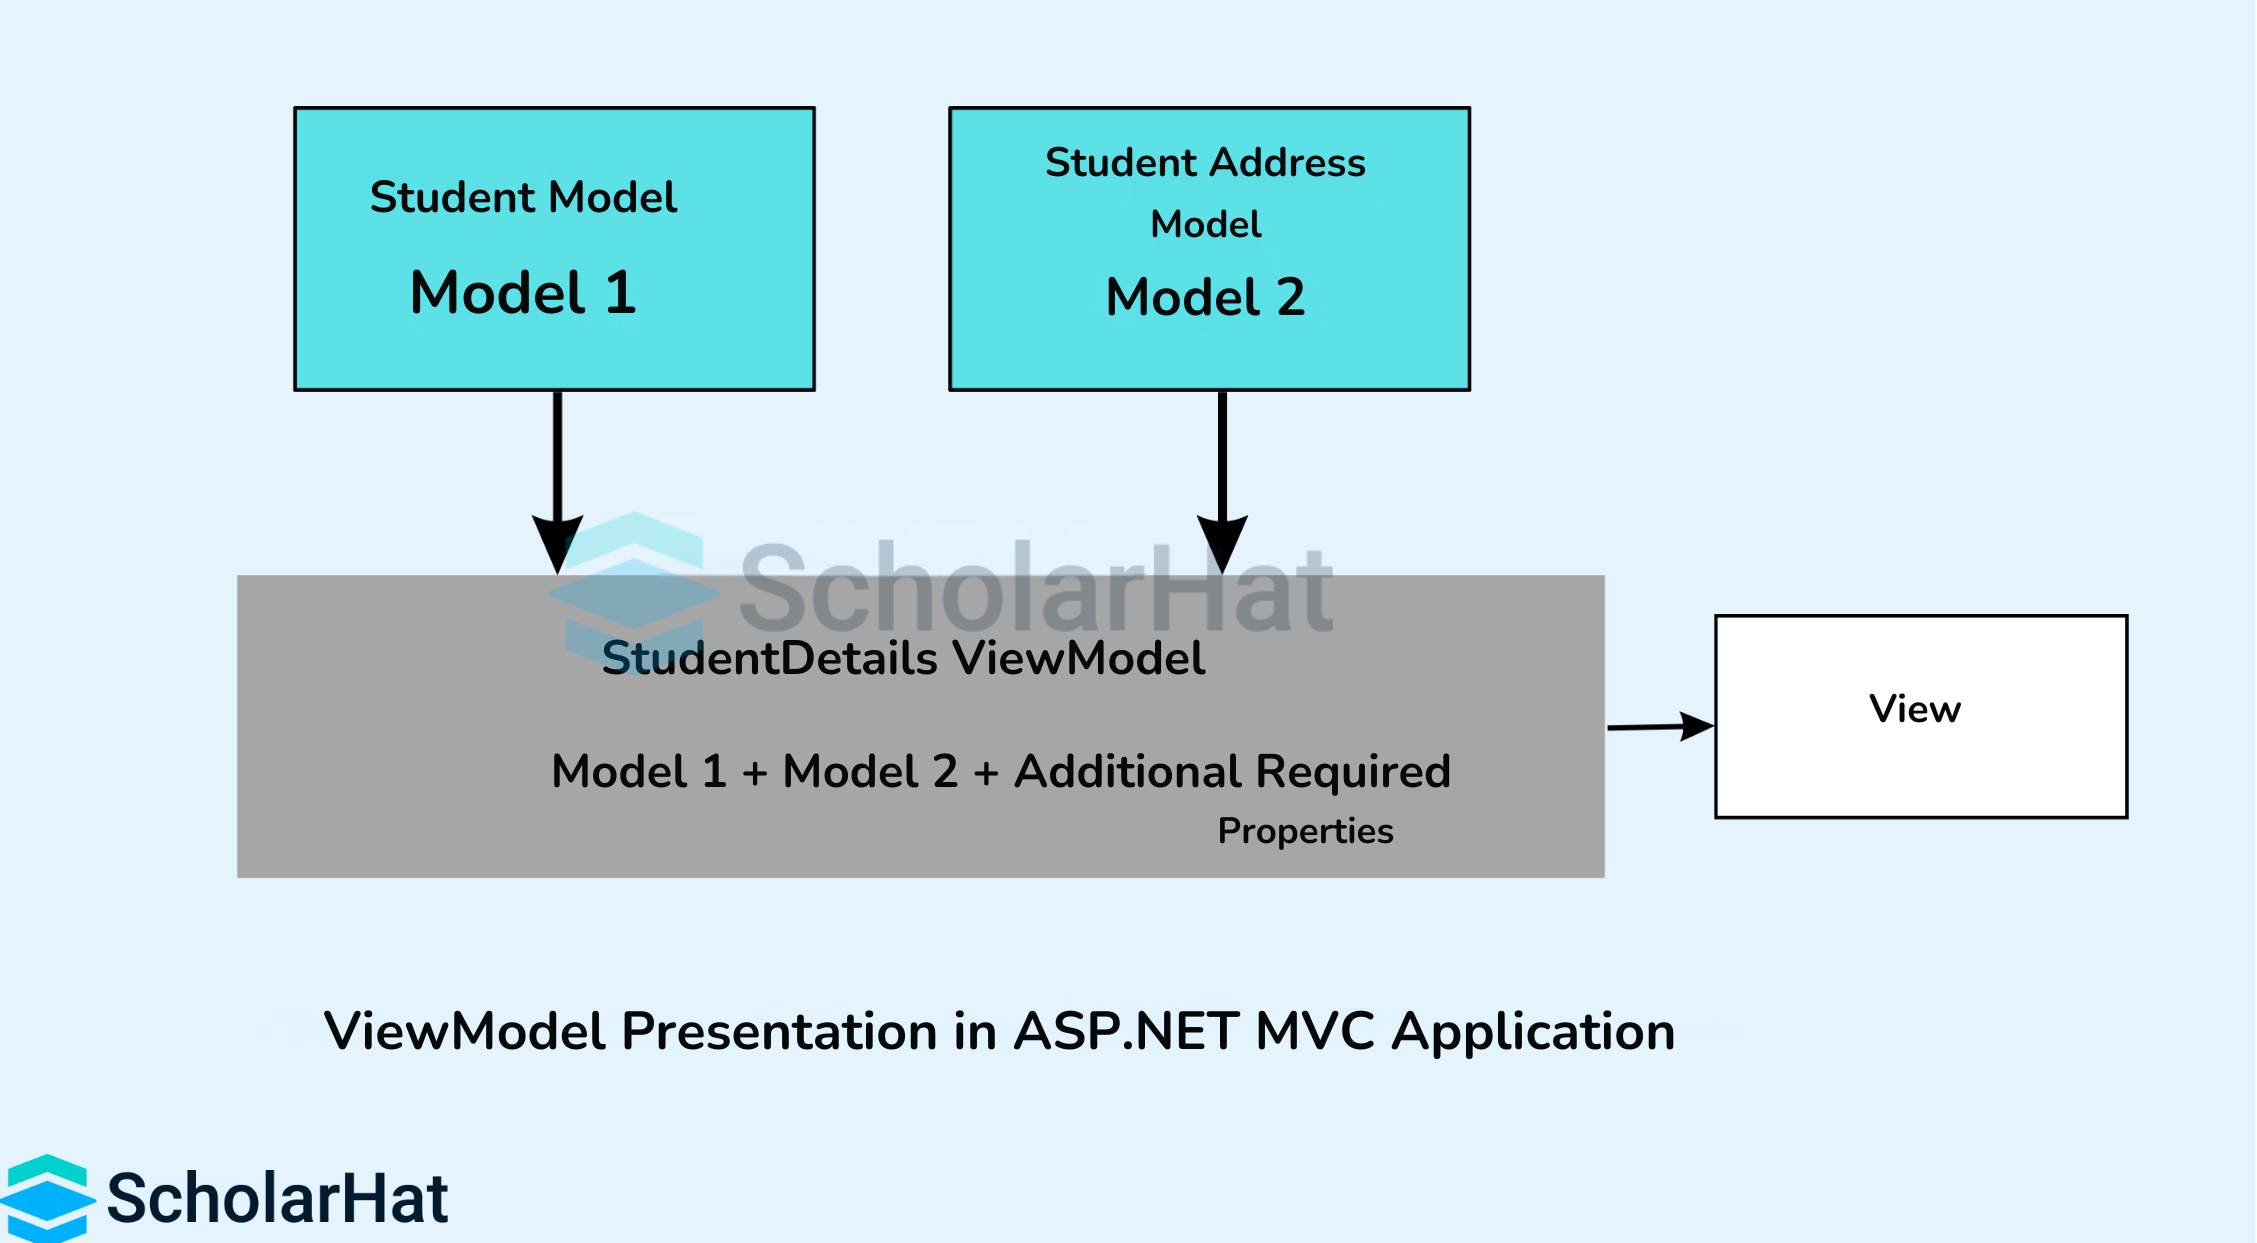 What is a ViewModel in ASP.NET MVC?